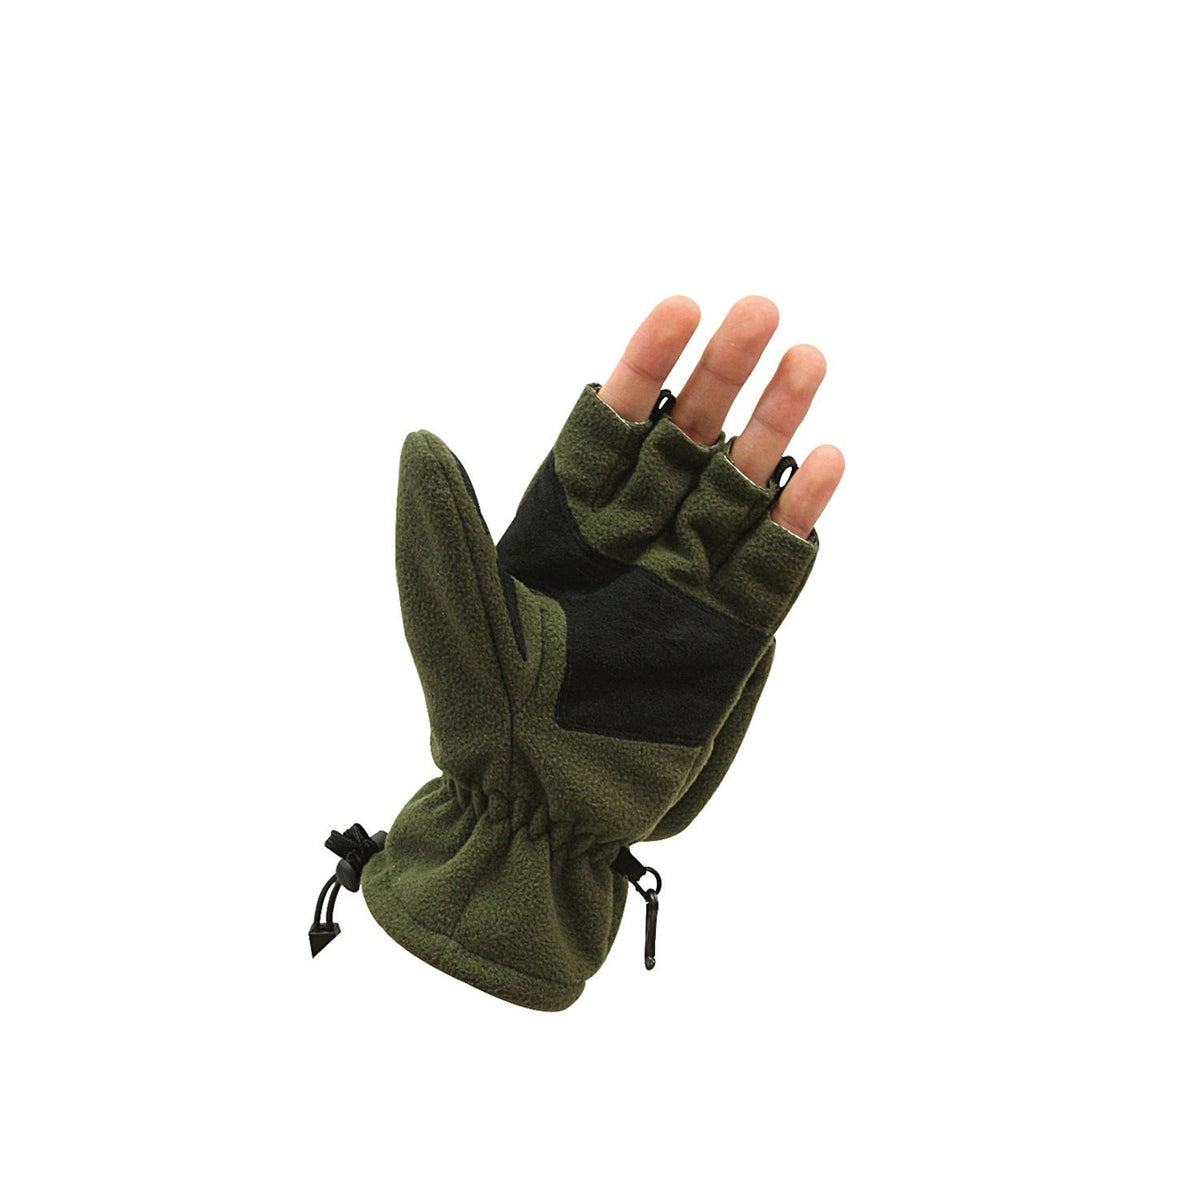 Rothco Fingerless Sniper Glove / Mittens Olive Drab